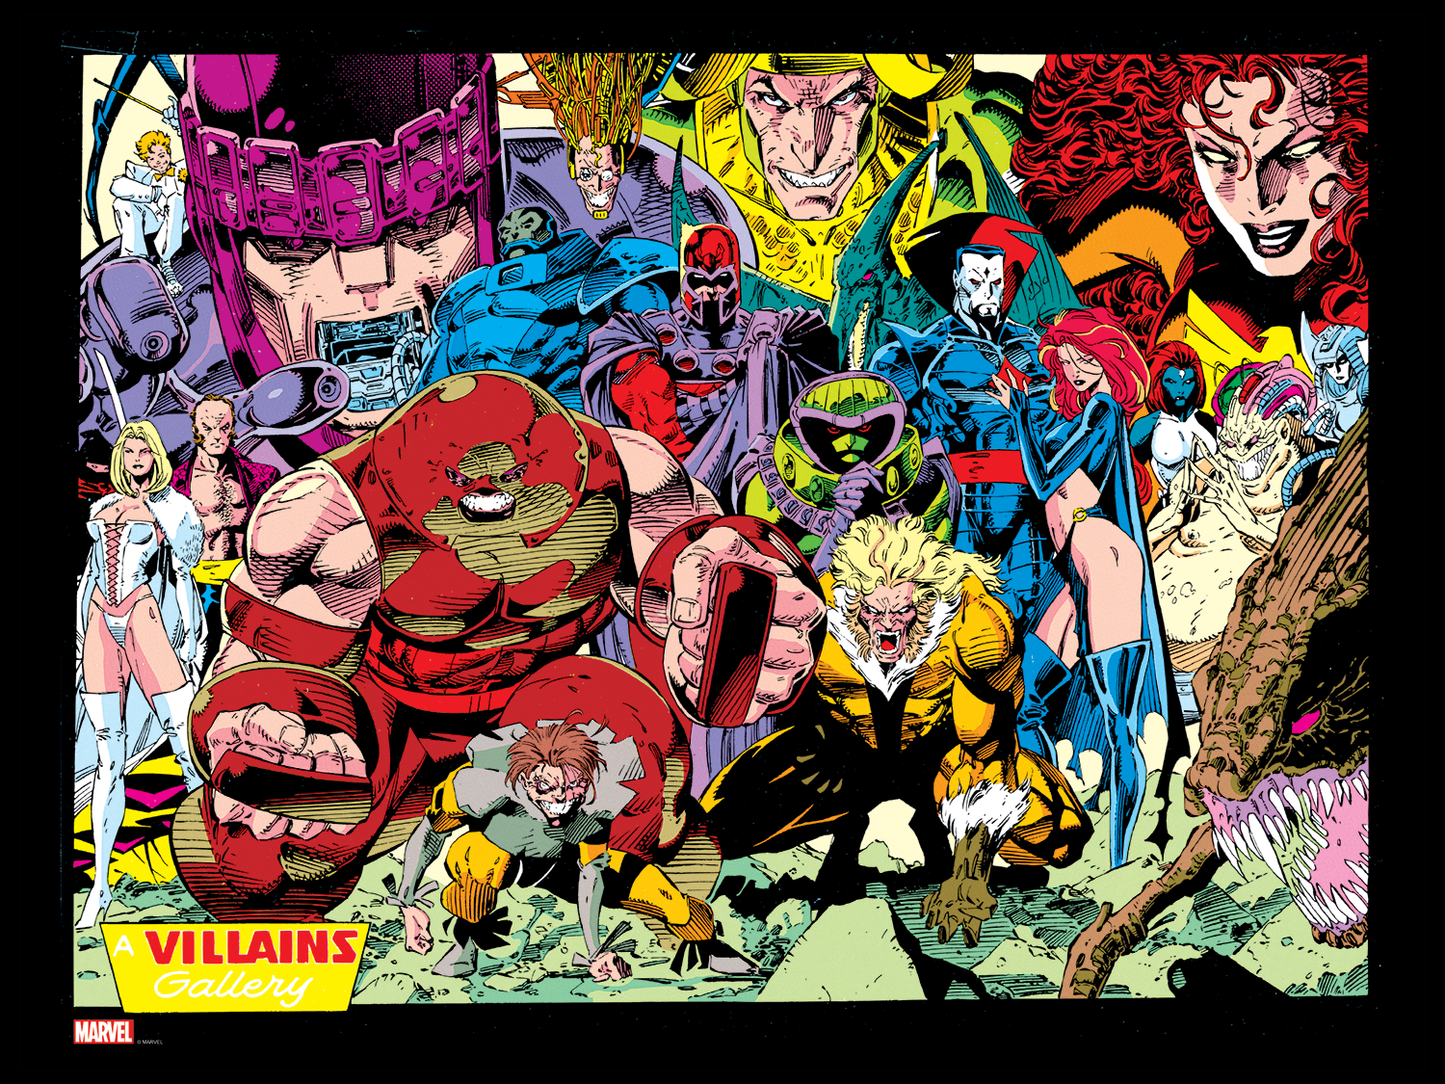 Jim Lee "X-Men Villains 20th Anniversary Cover"